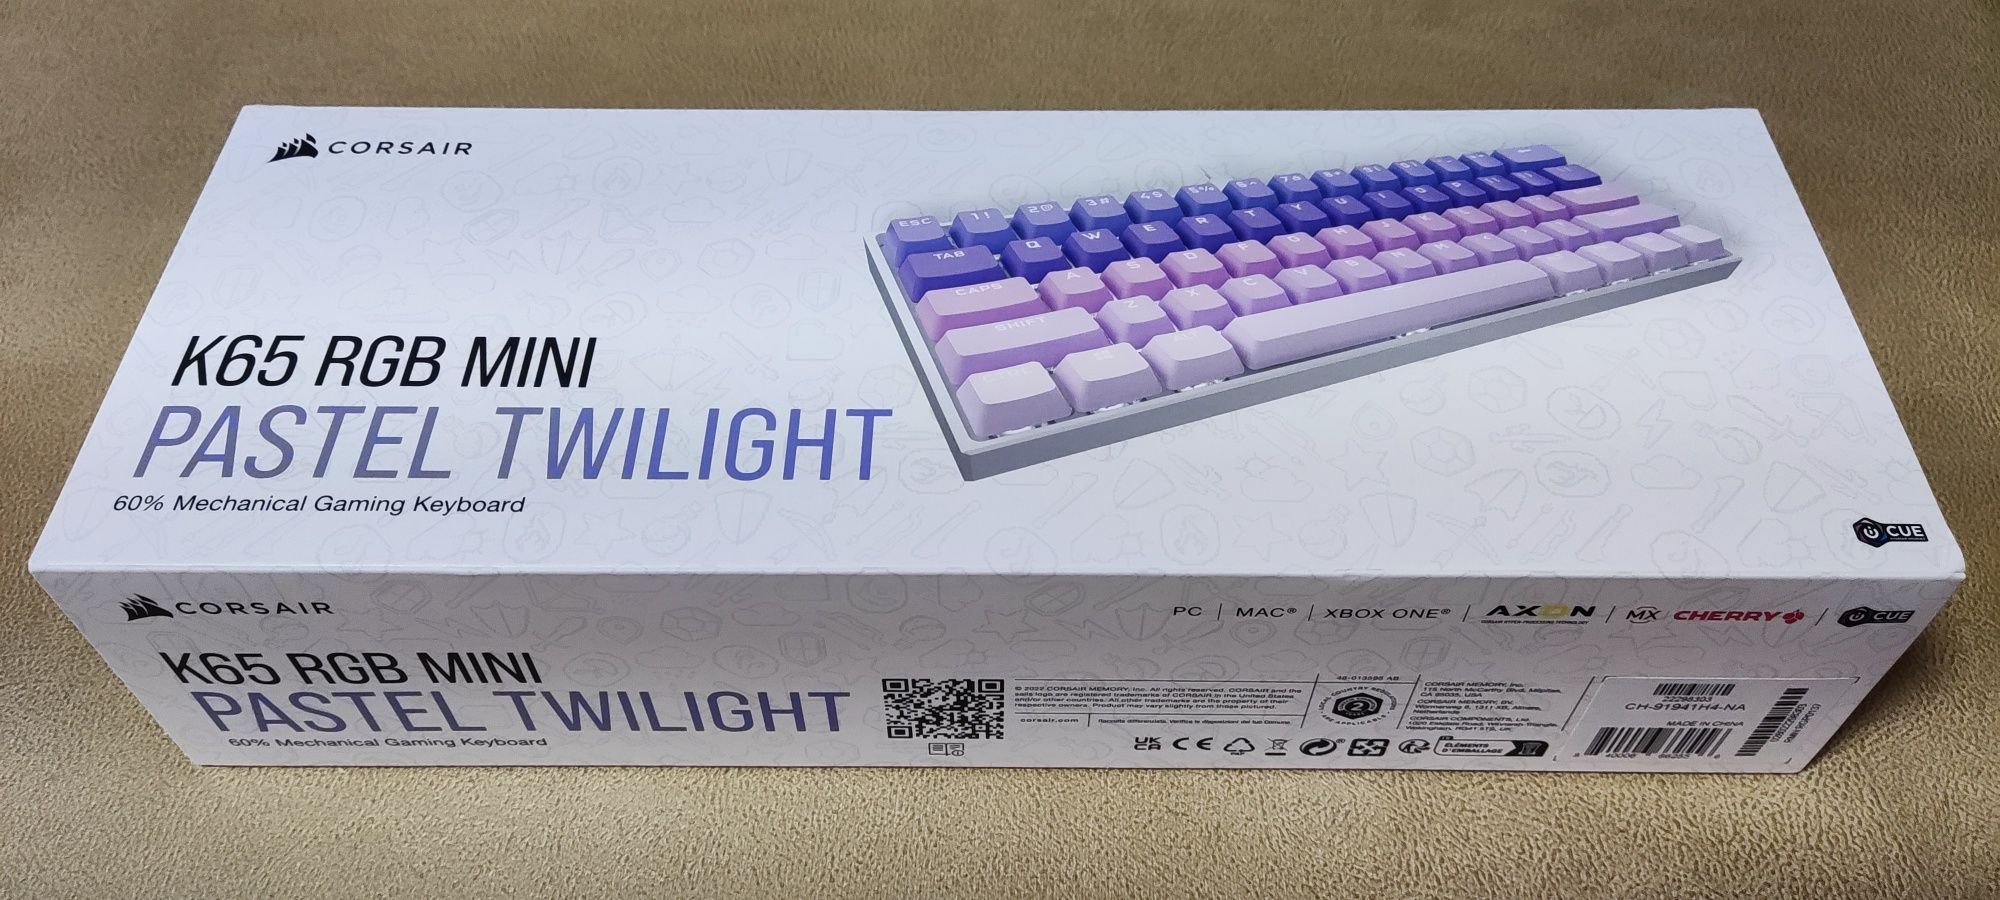 Новая клавиатура Corsair K65 RGB MINI 60% Mechanical Pastel Twilight